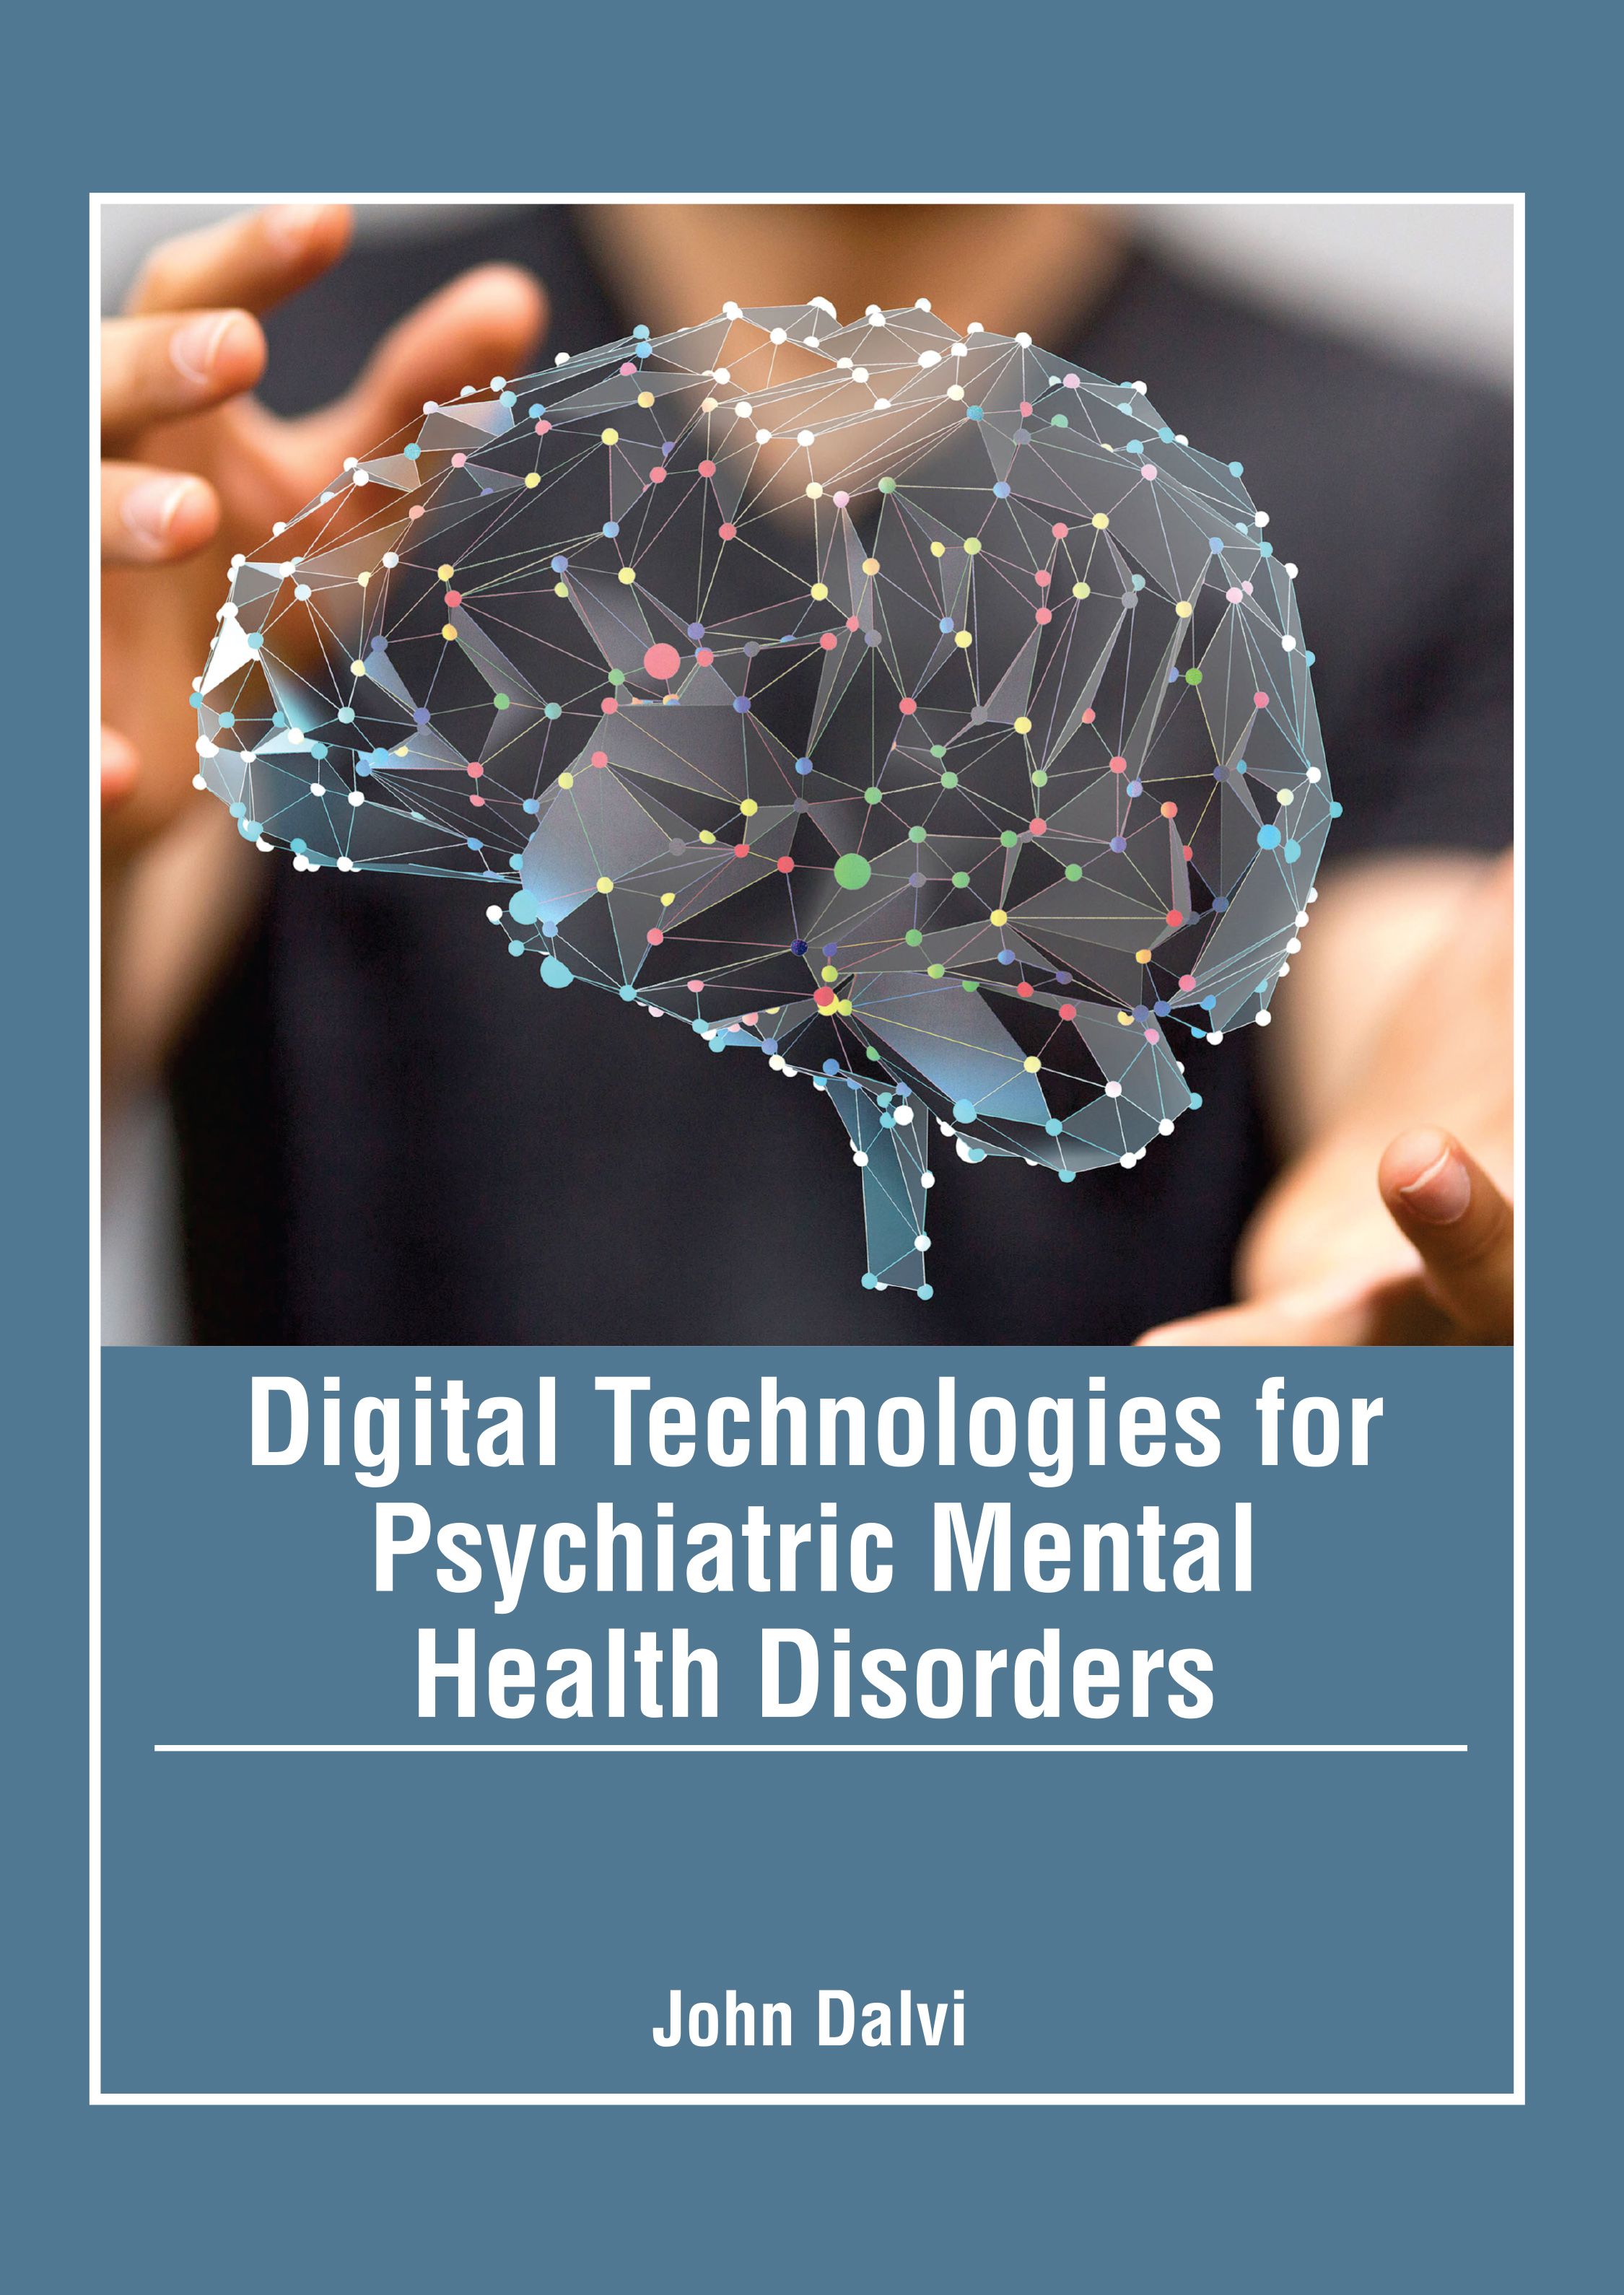 DIGITAL TECHNOLOGIES FOR PSYCHIATRIC MENTAL HEALTH DISORDERS